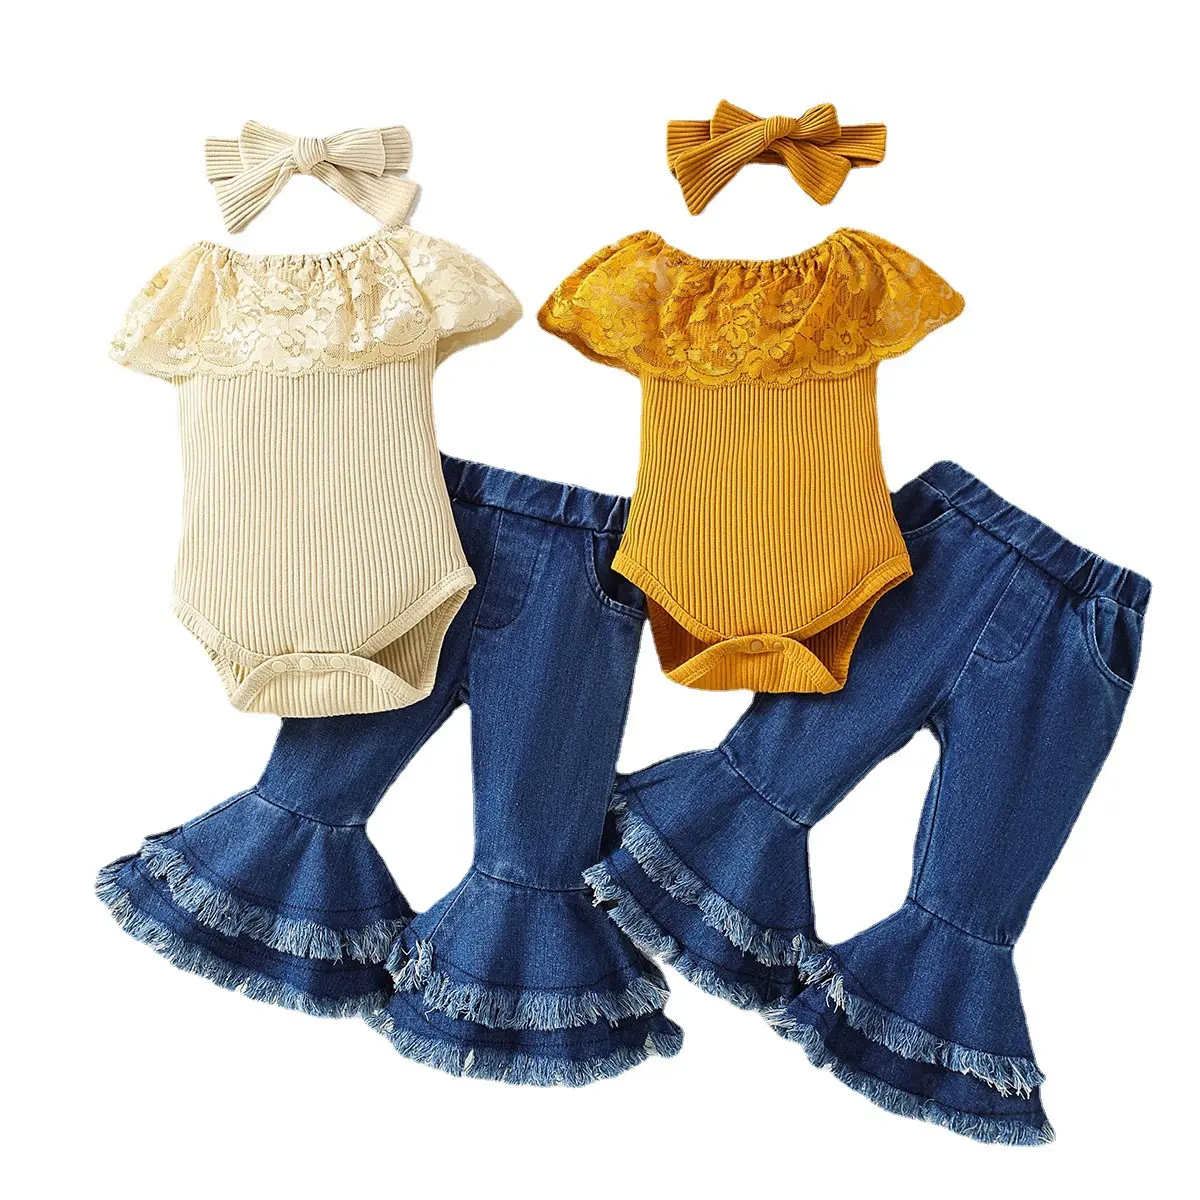 Nuevo bebé niñas primavera otoño ropa niñas encaje mameluco jeans diadema ropa conjunto niños manga acampanada tops pantalones de mezclilla traje